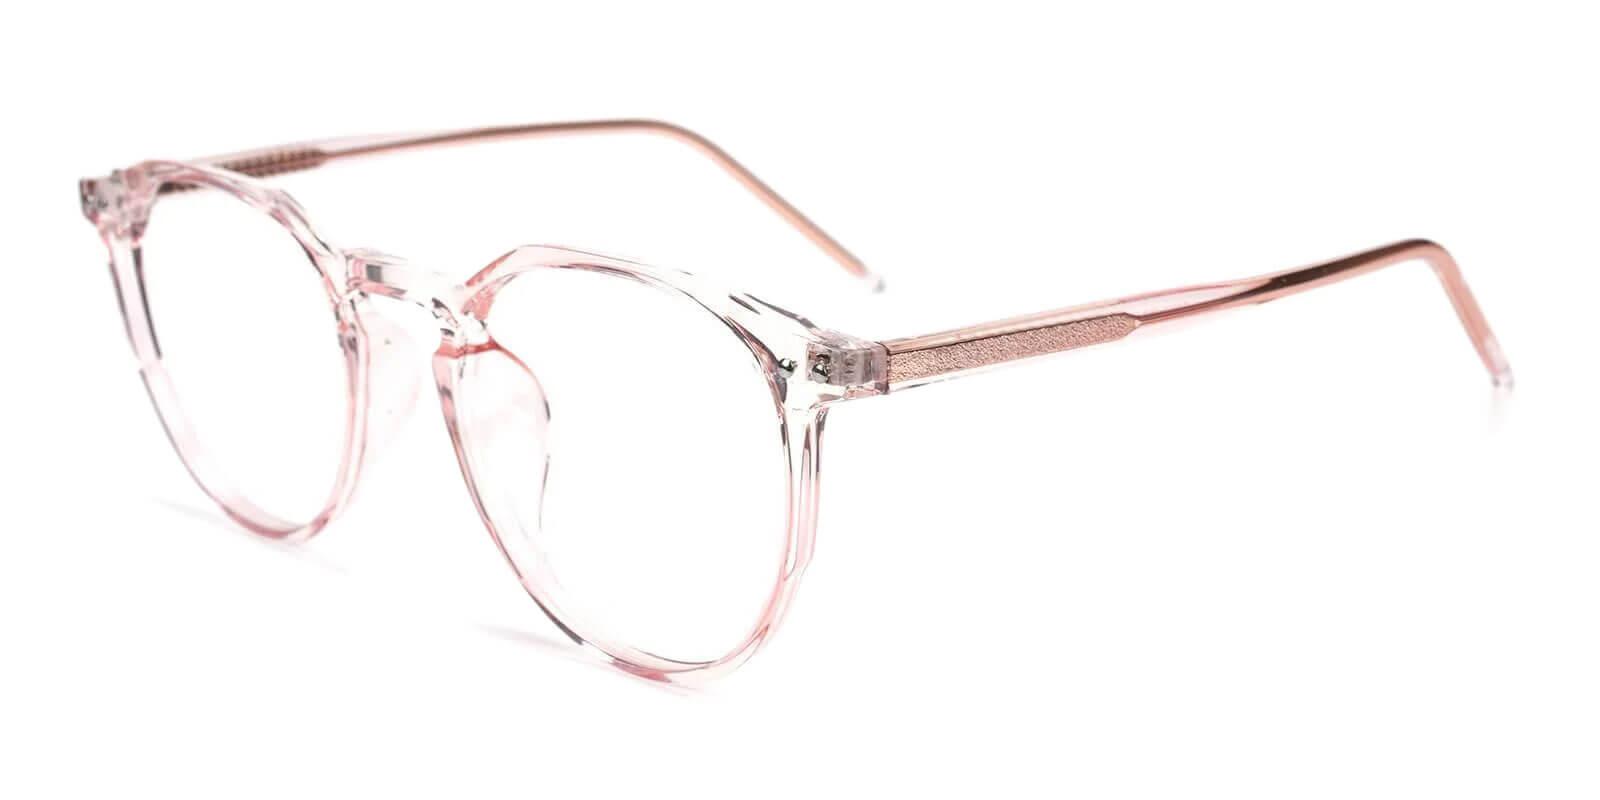 Mariner Pink Acetate Eyeglasses , SpringHinges , UniversalBridgeFit Frames from ABBE Glasses